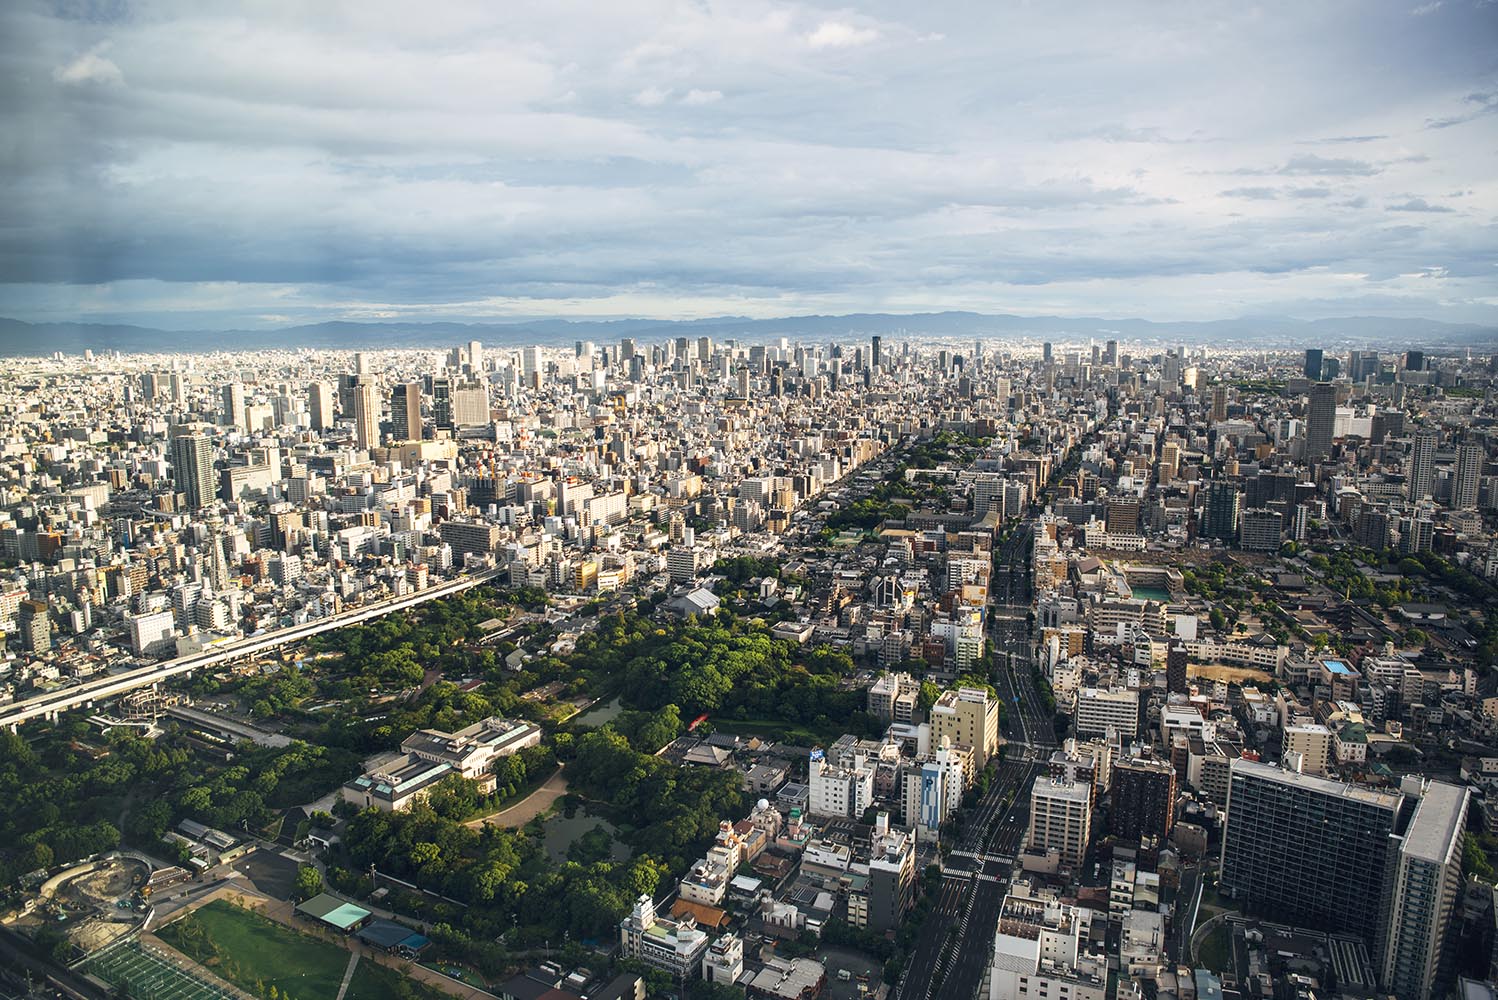 Aerial view of Osaka city, Japan